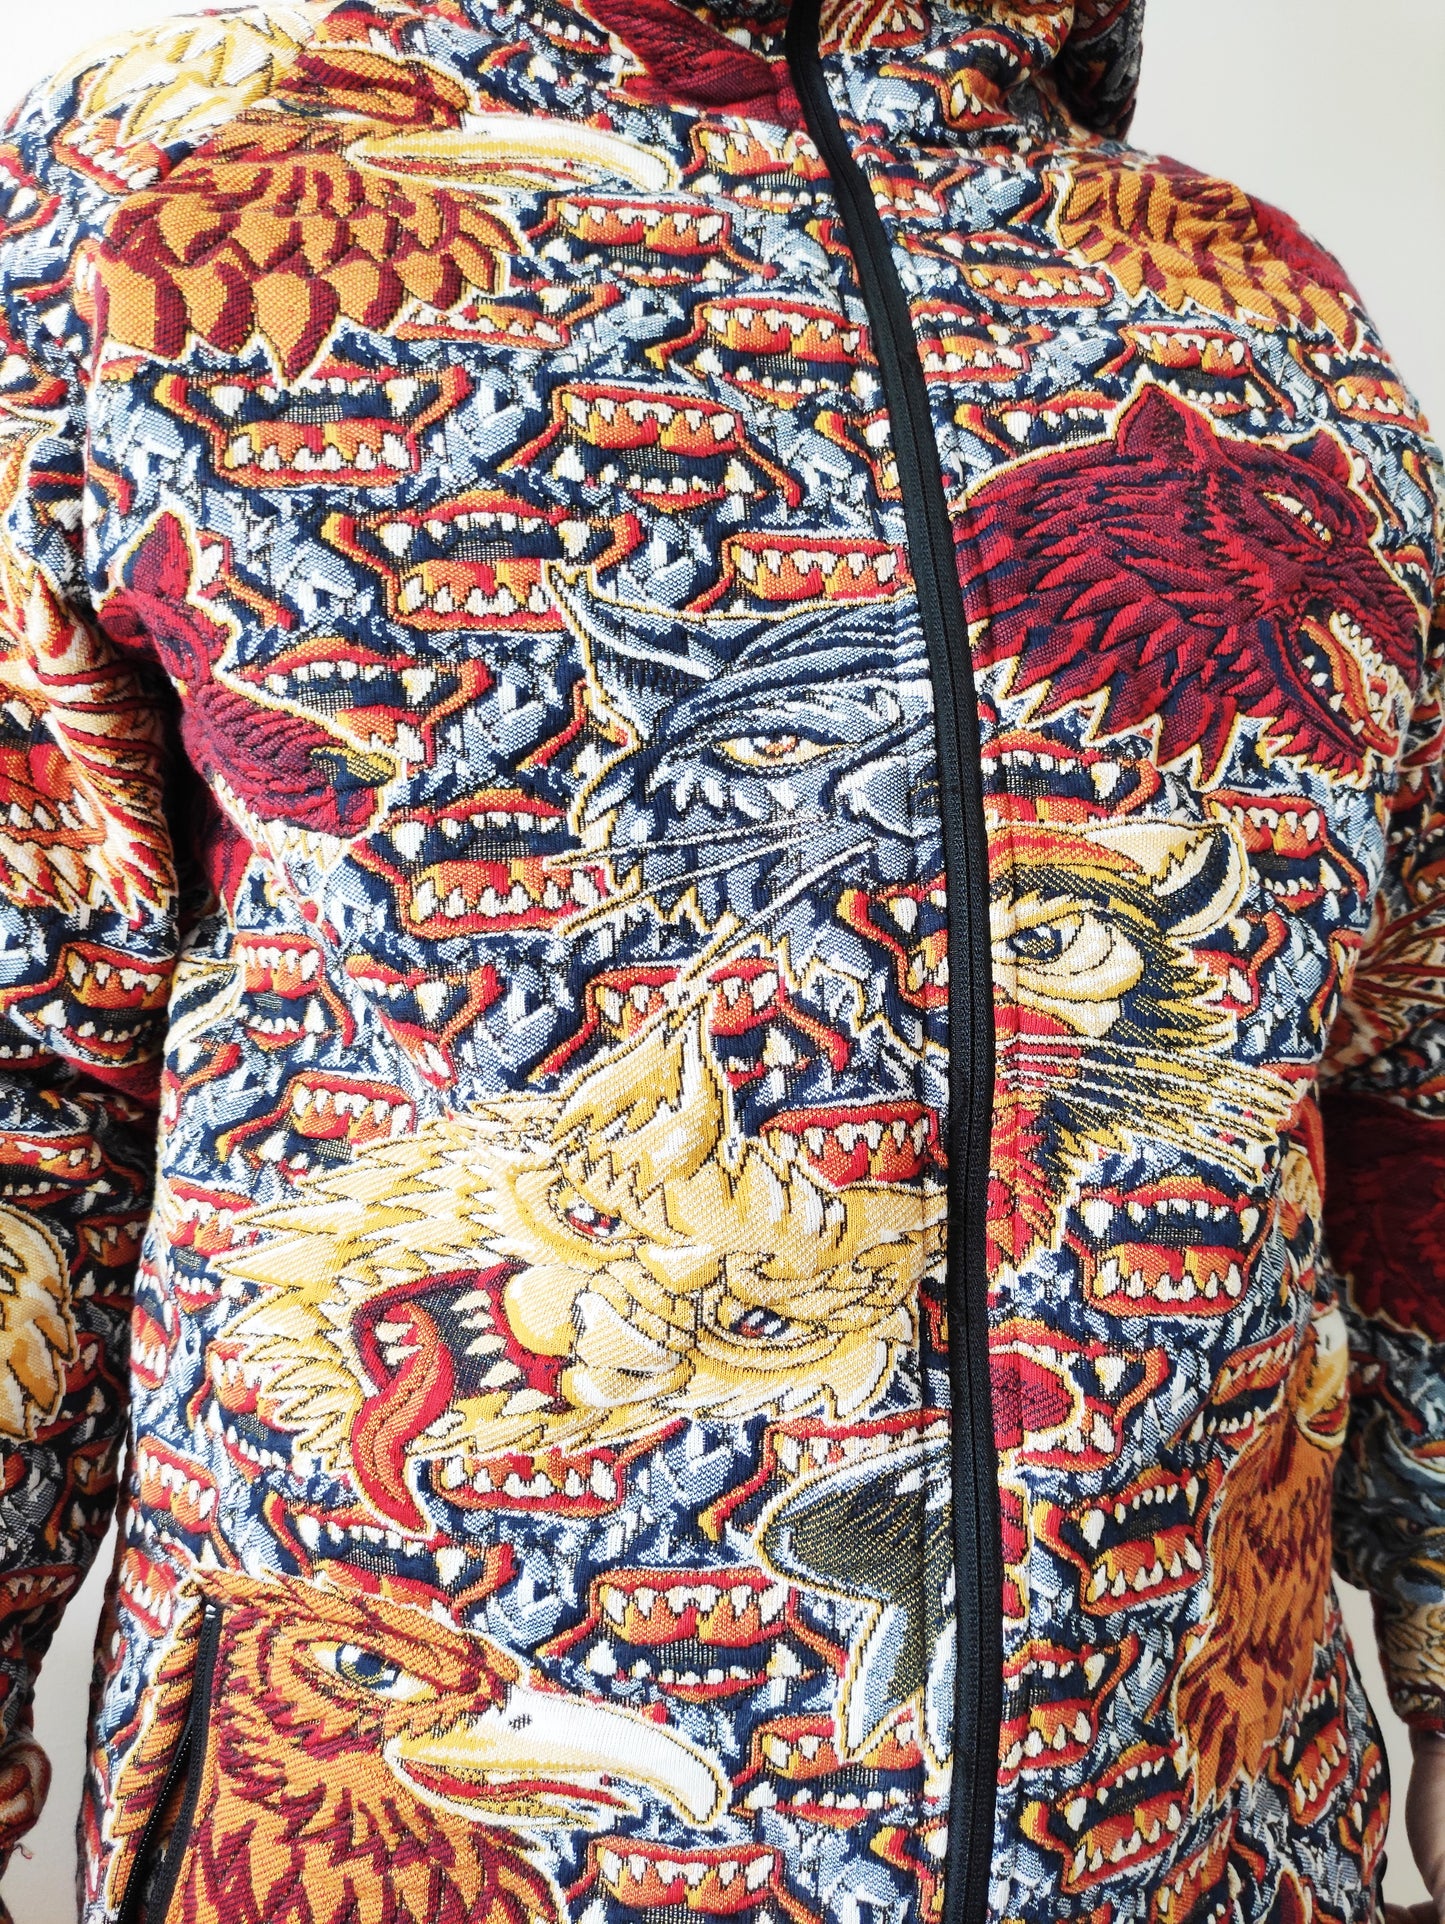 XS - 6XL Dragon Embossed Jacket / Mystical Animals Sweatshirt Winter / Pullover Hoodie